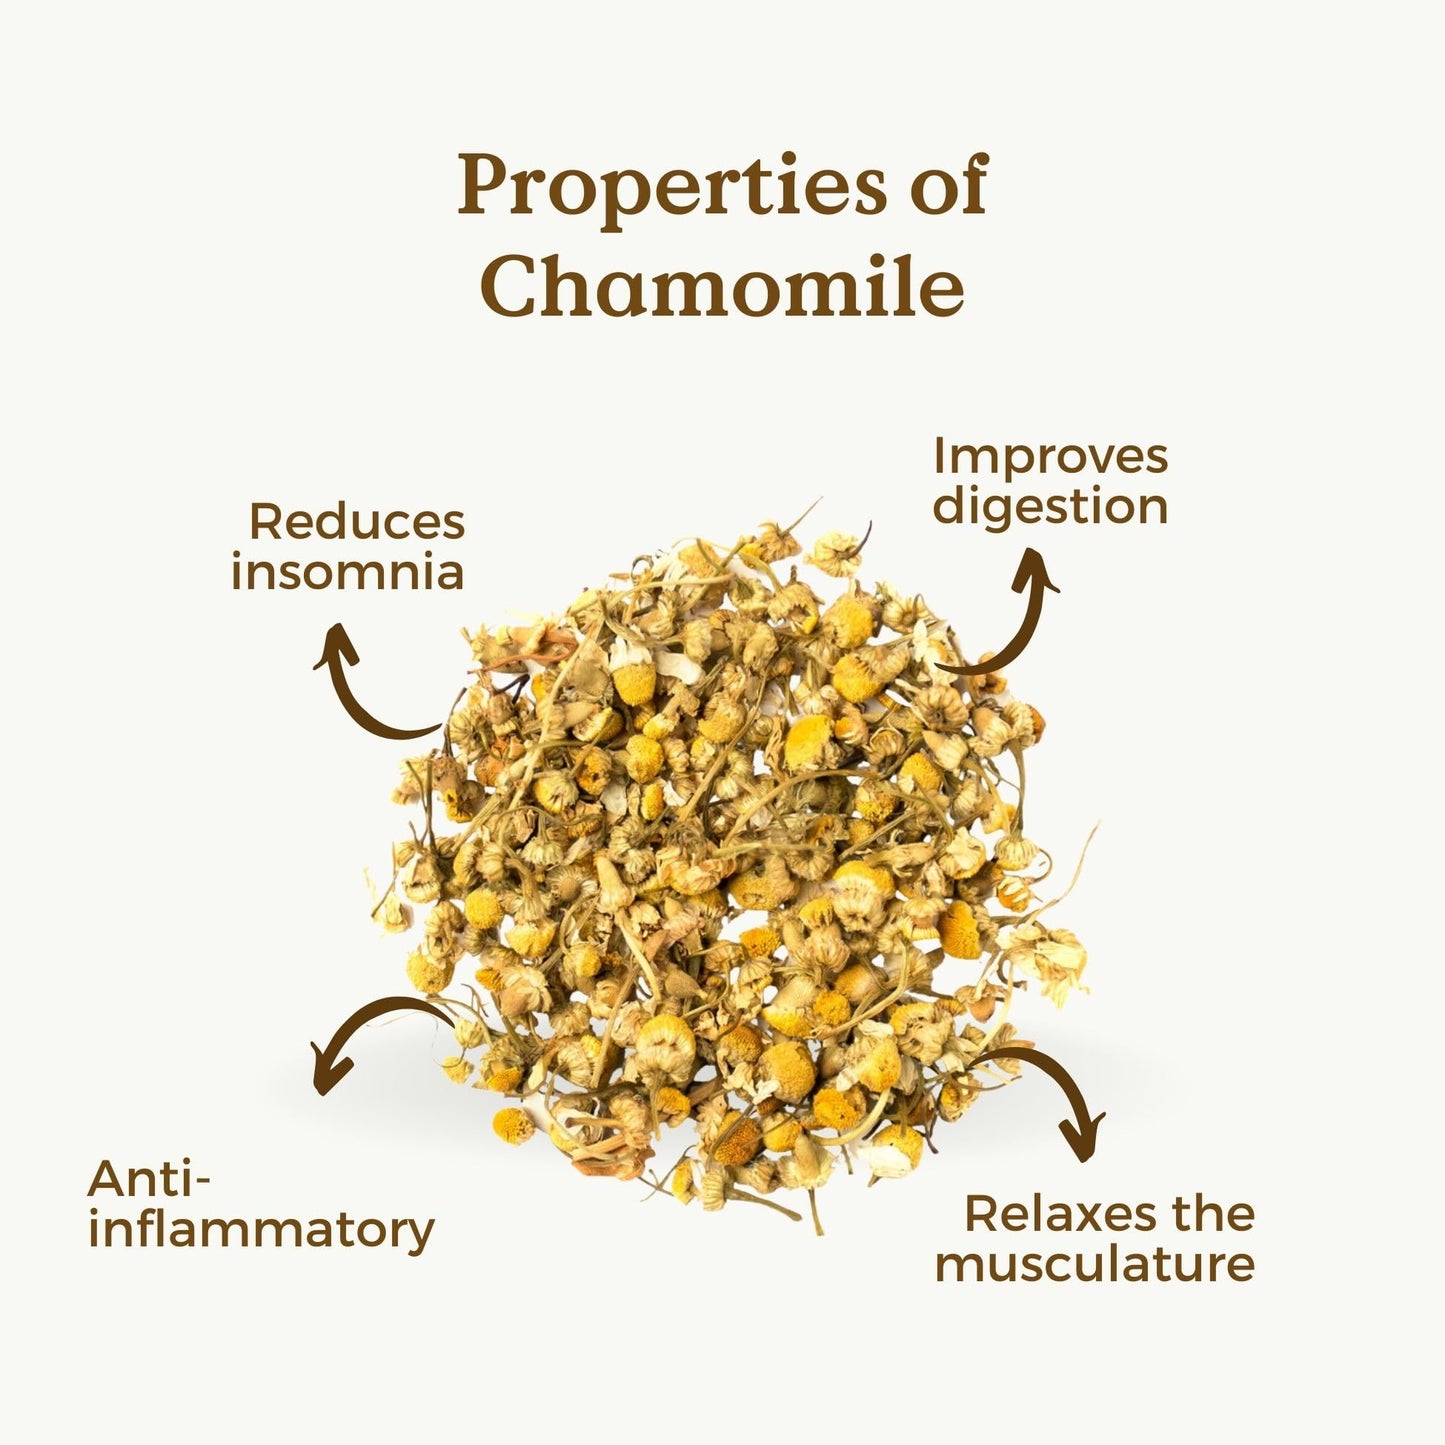 Chamomile Tea Loose Organic 100g (50 Cups) | European Chamomile Flowers, Clean and Dried REPLANTEA